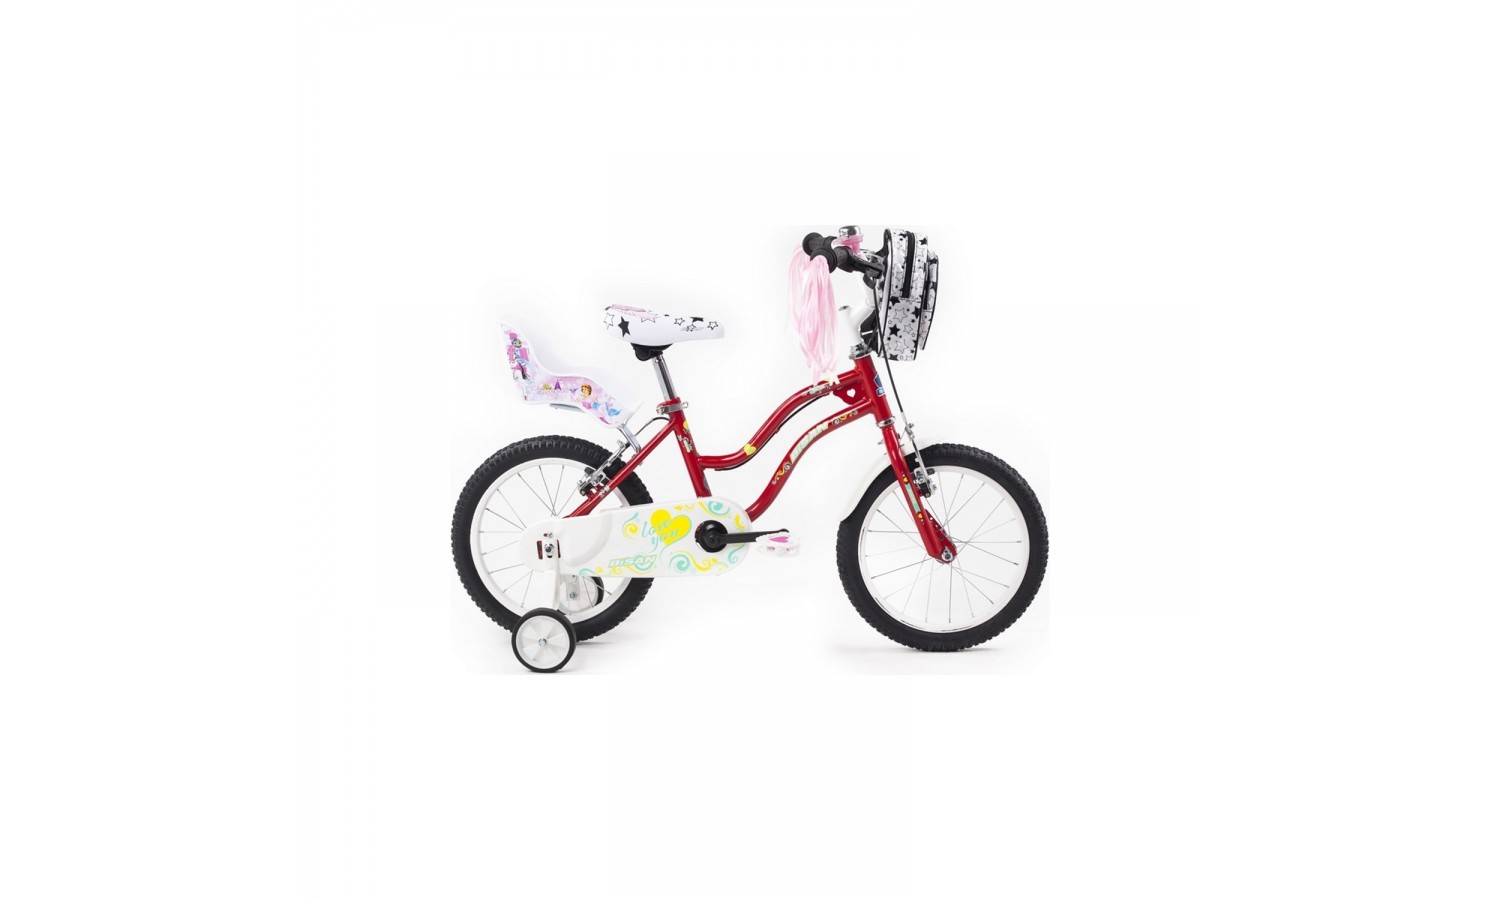 Bisan Kds 2100 Çocuk Bisikleti 16 Jant (Kırmızı)